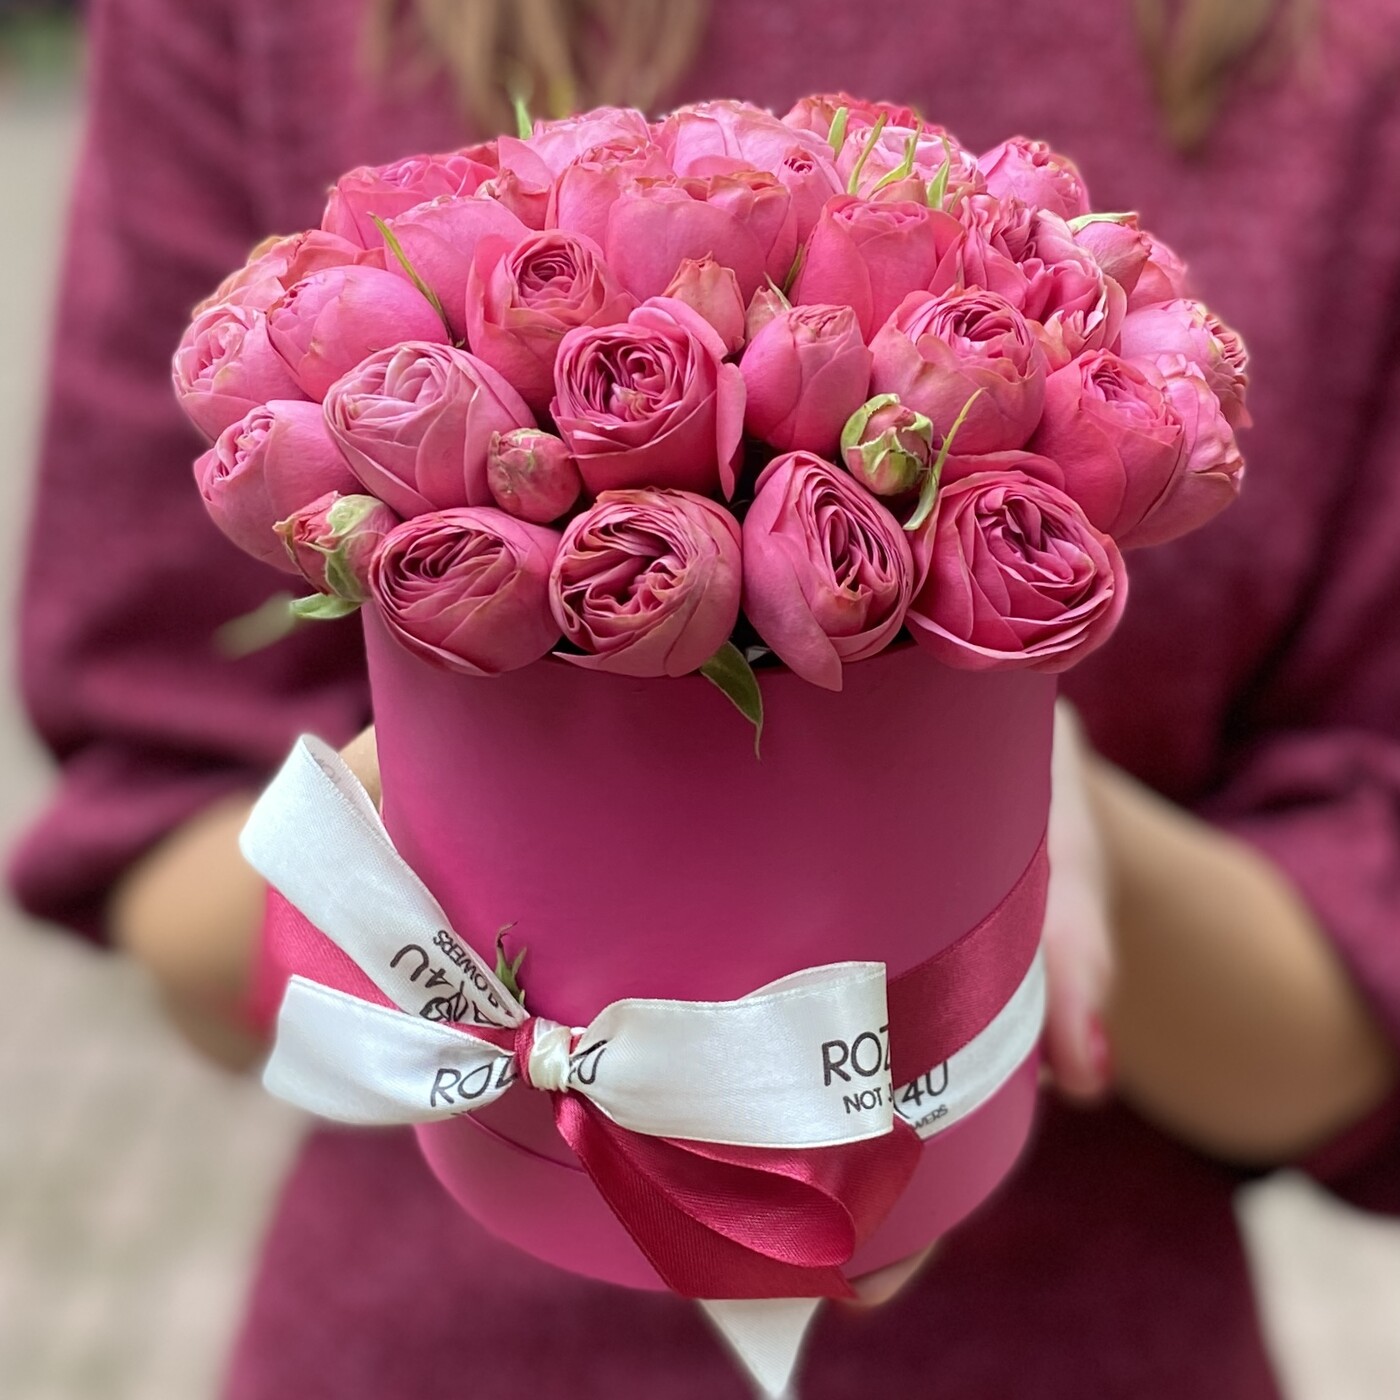 Букет розовых роз в коробке - цена до 2000 рублей на День Матери